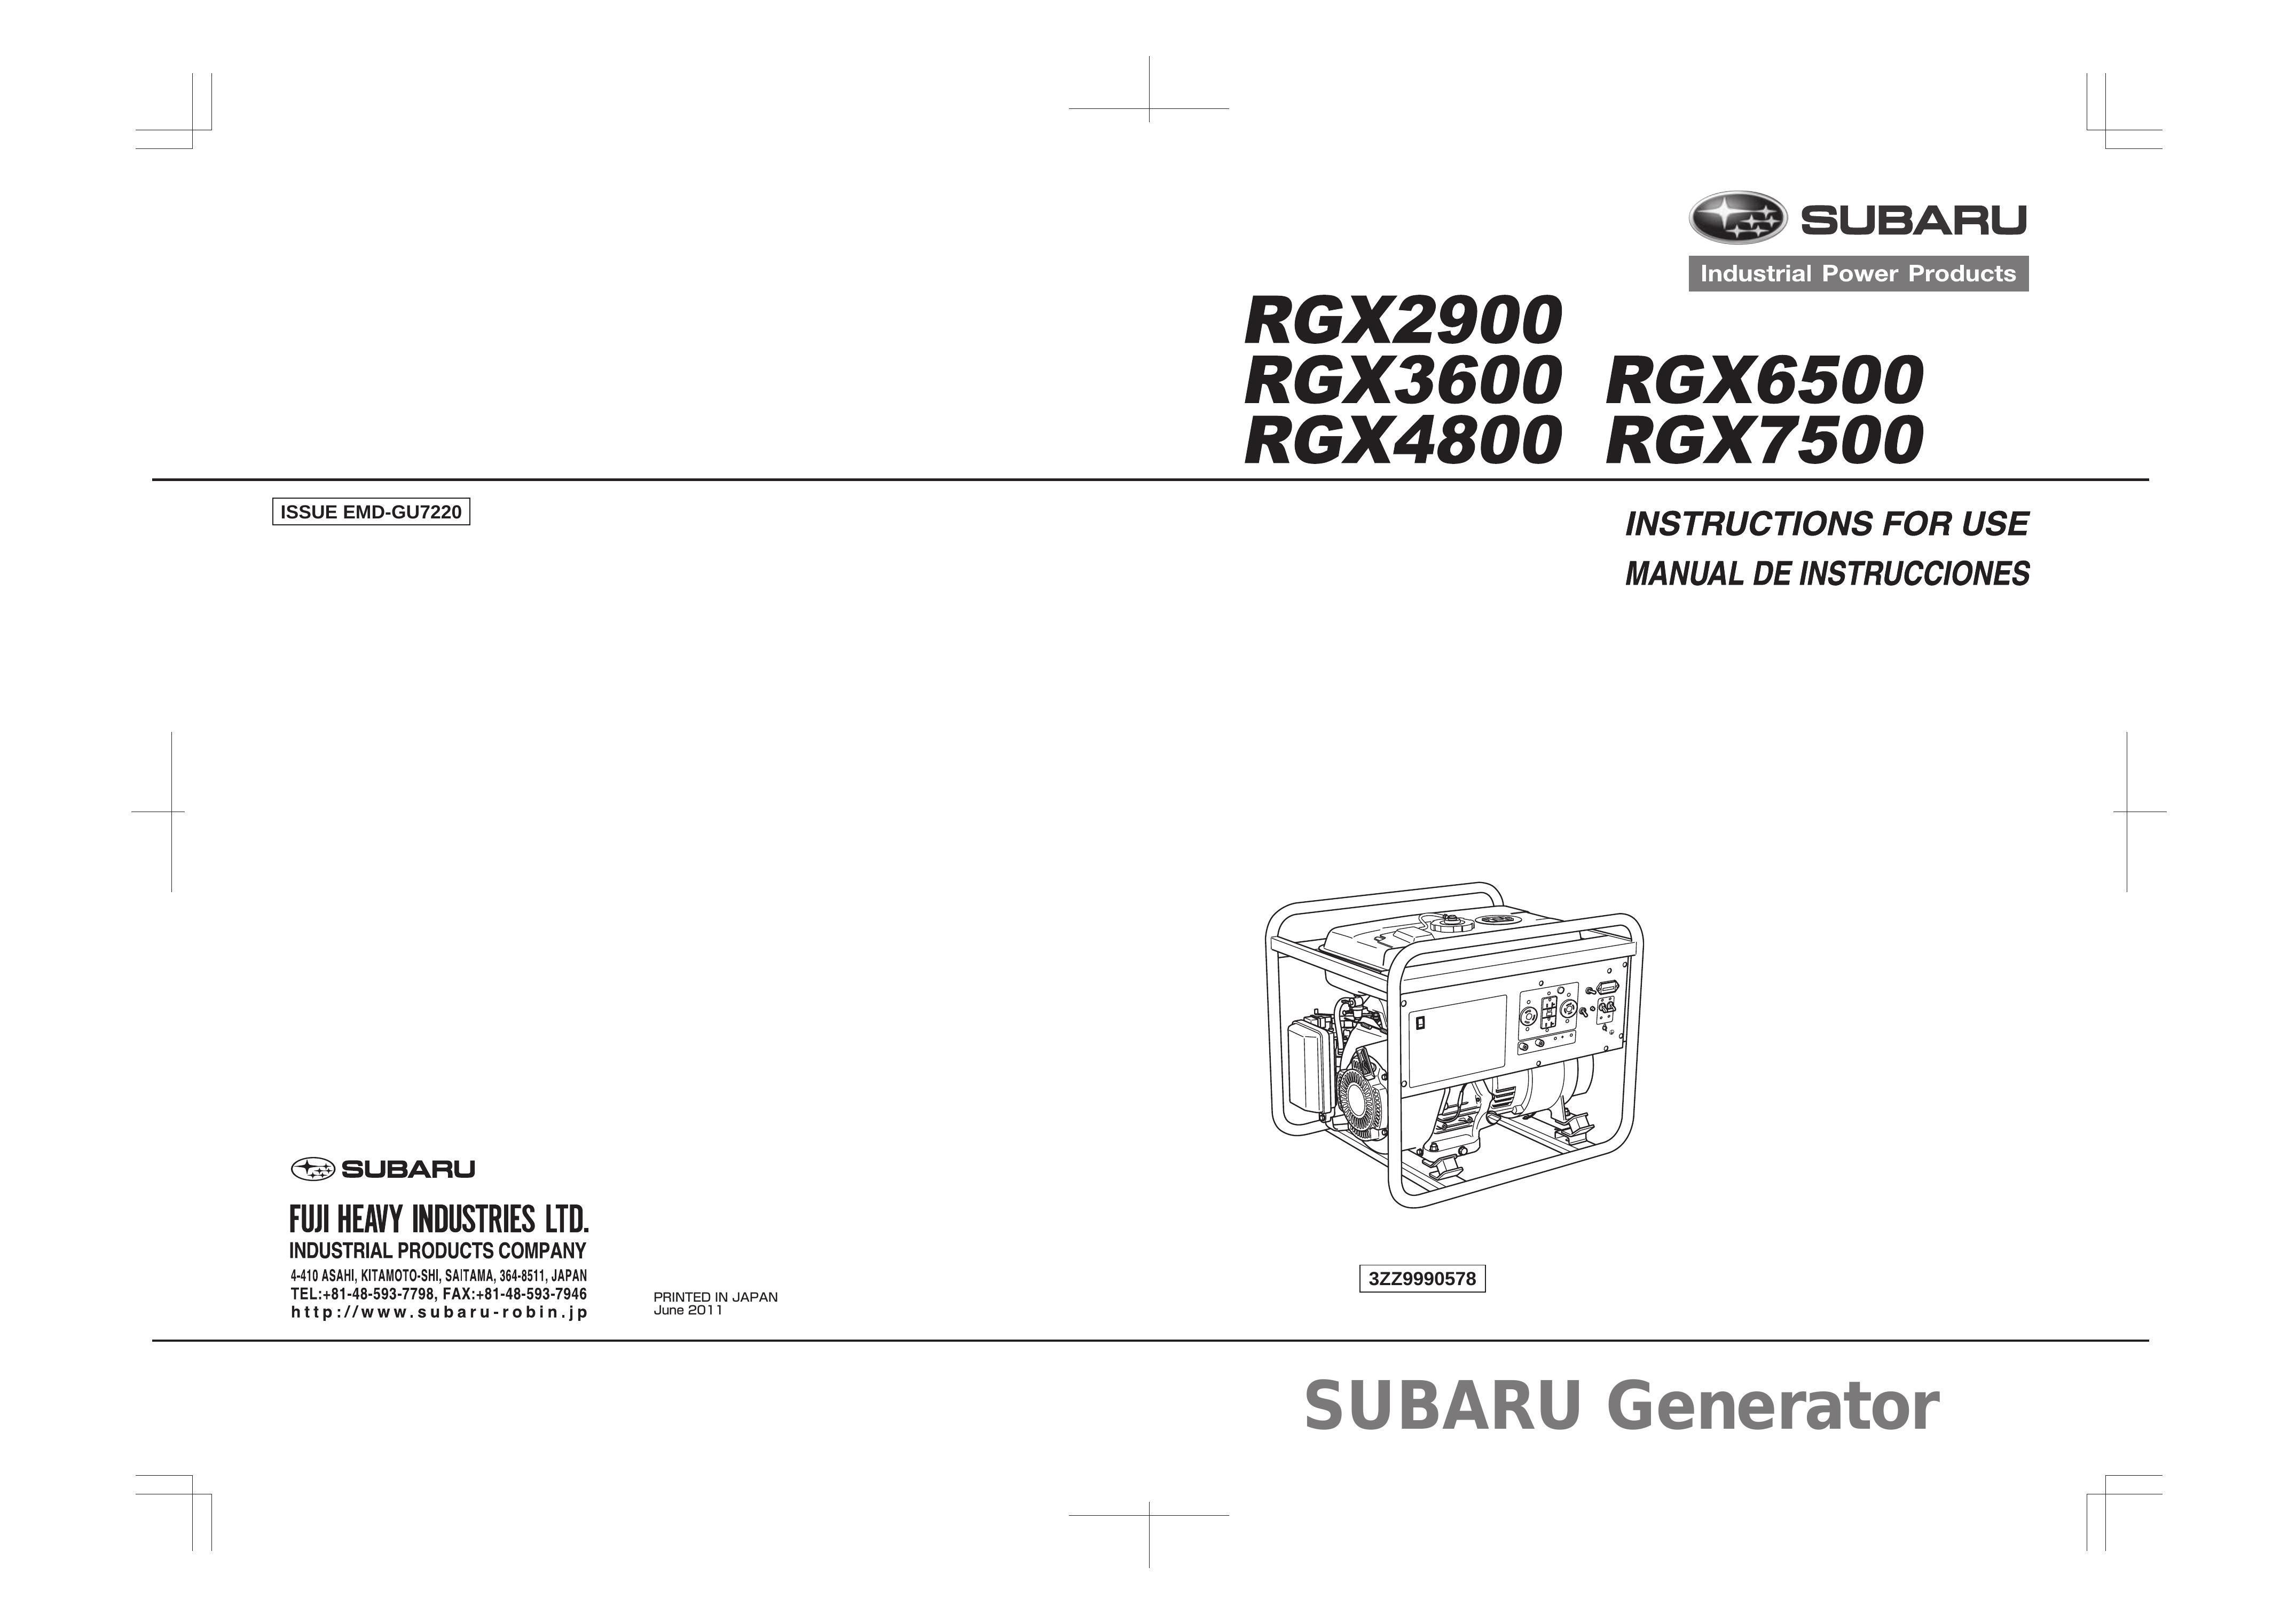 Subaru RGX2900 Portable Generator User Manual